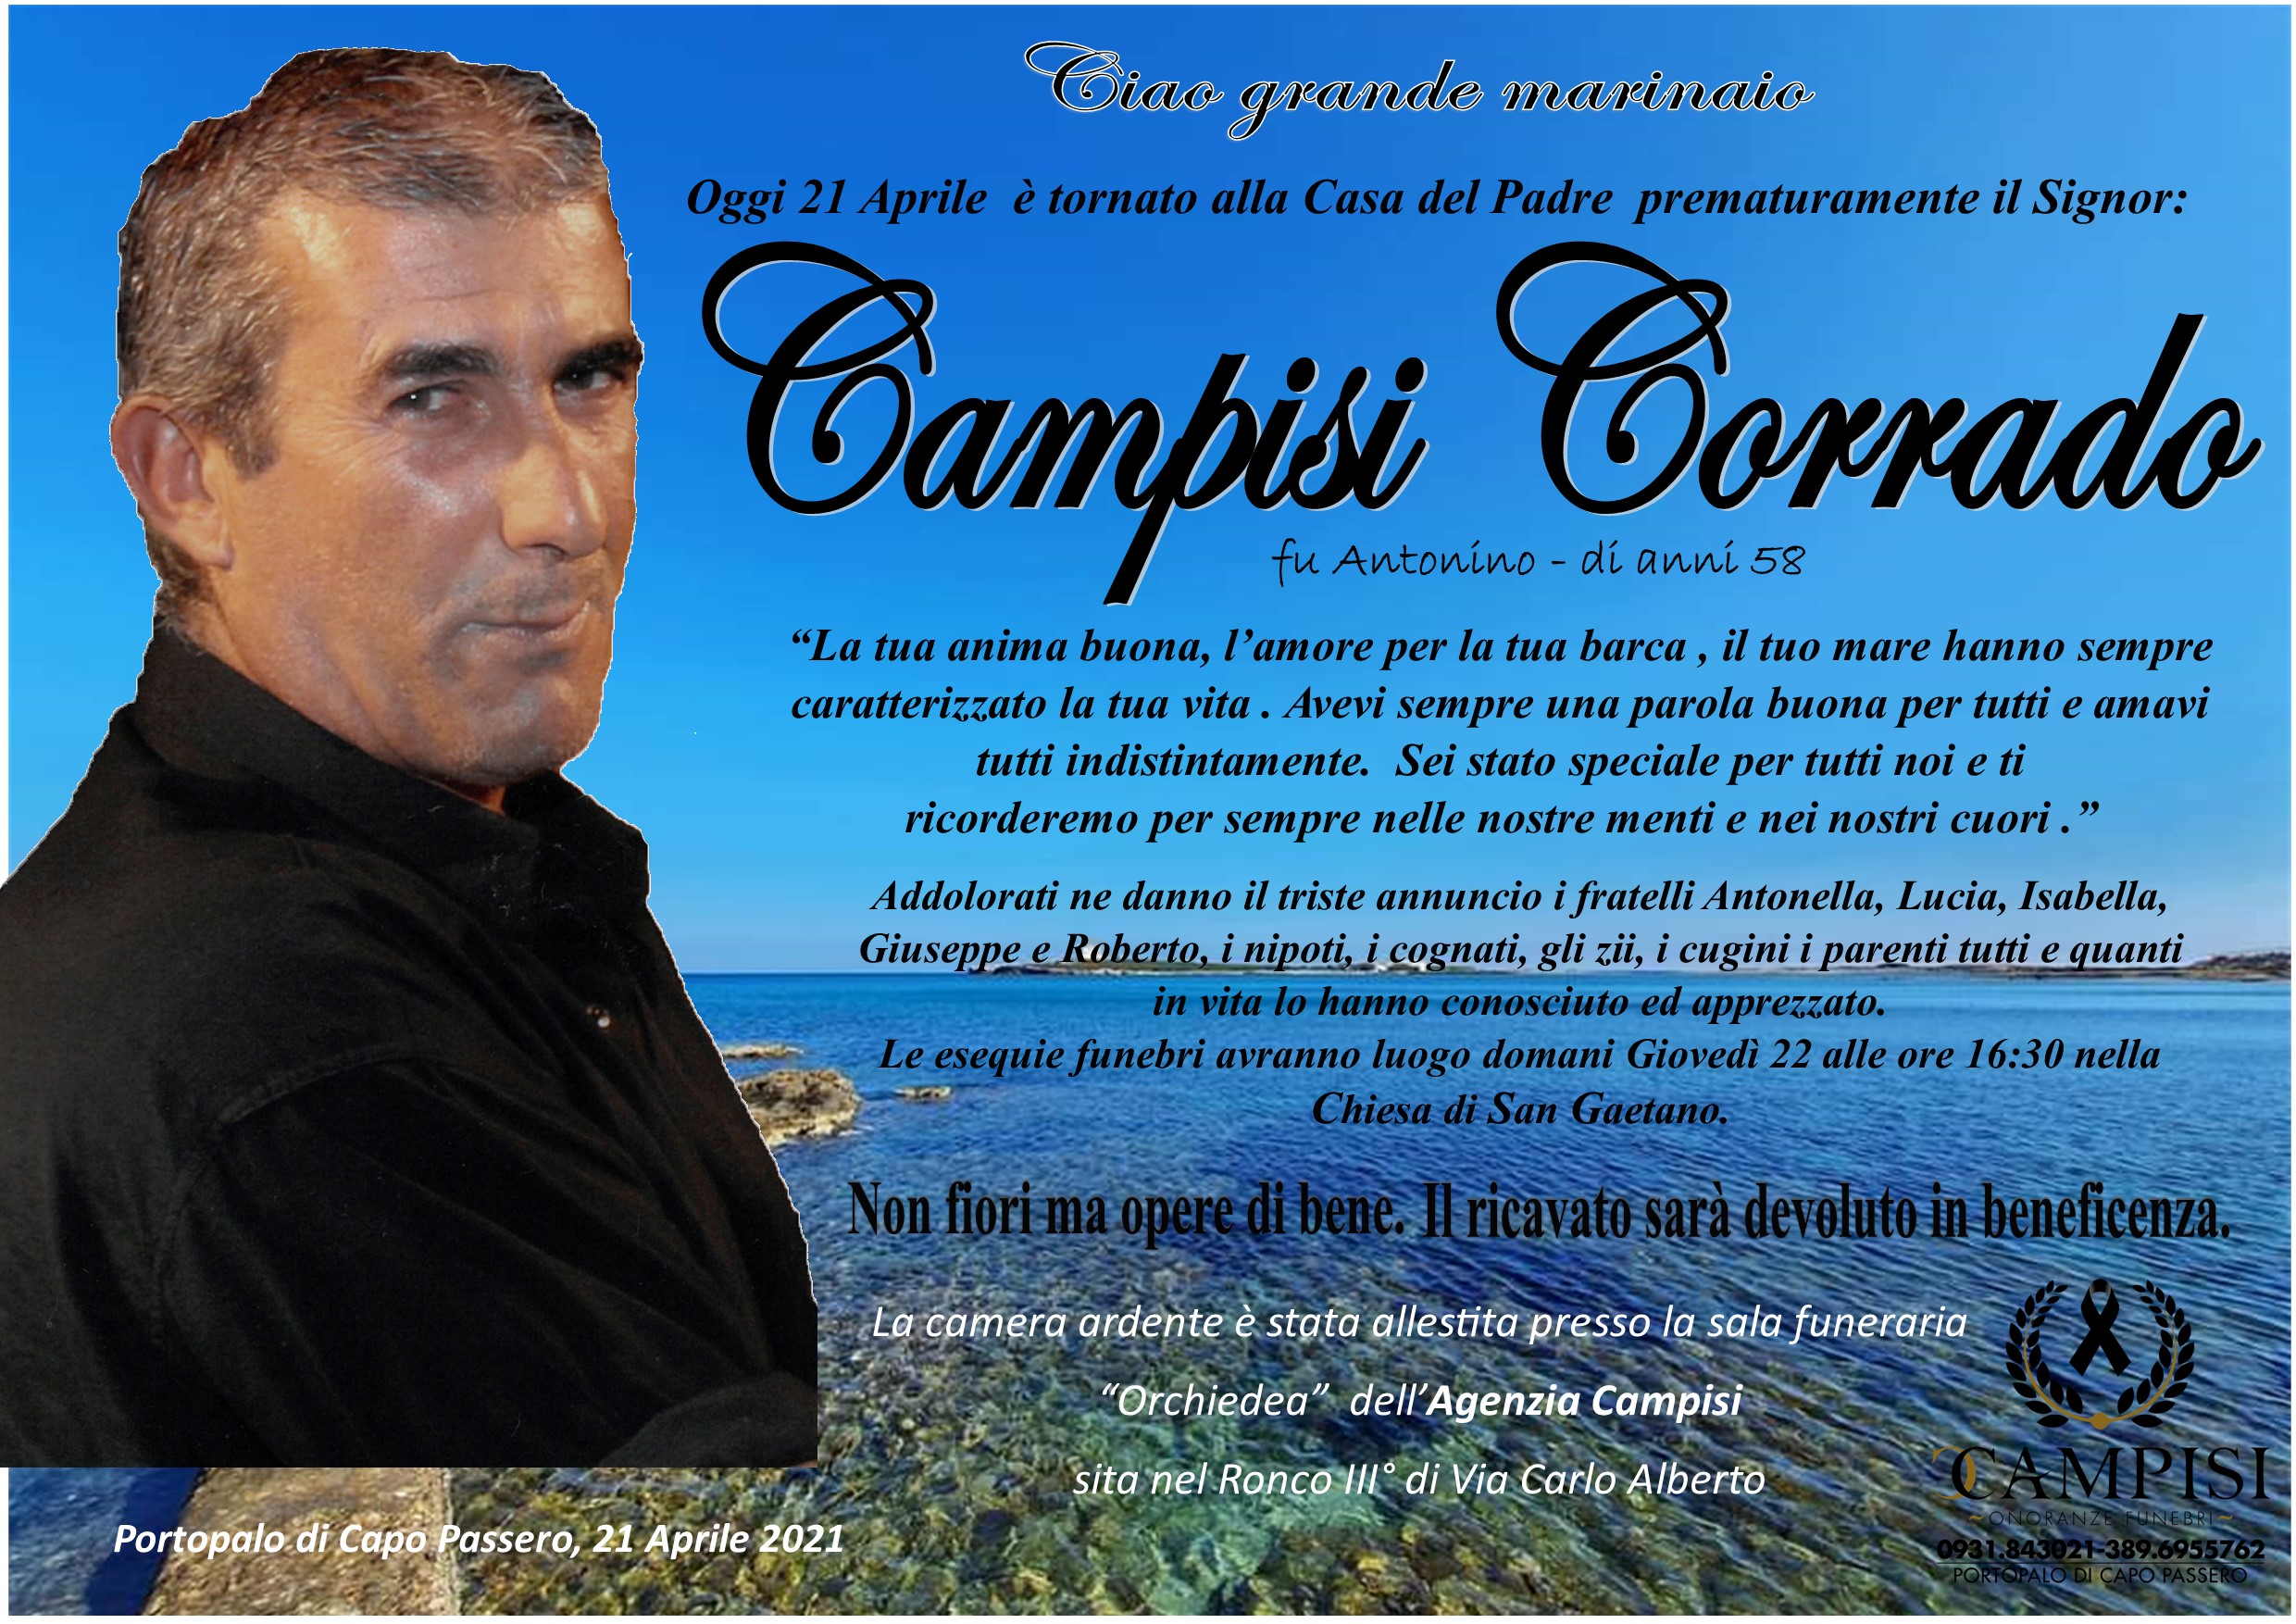 Campisi Corrado